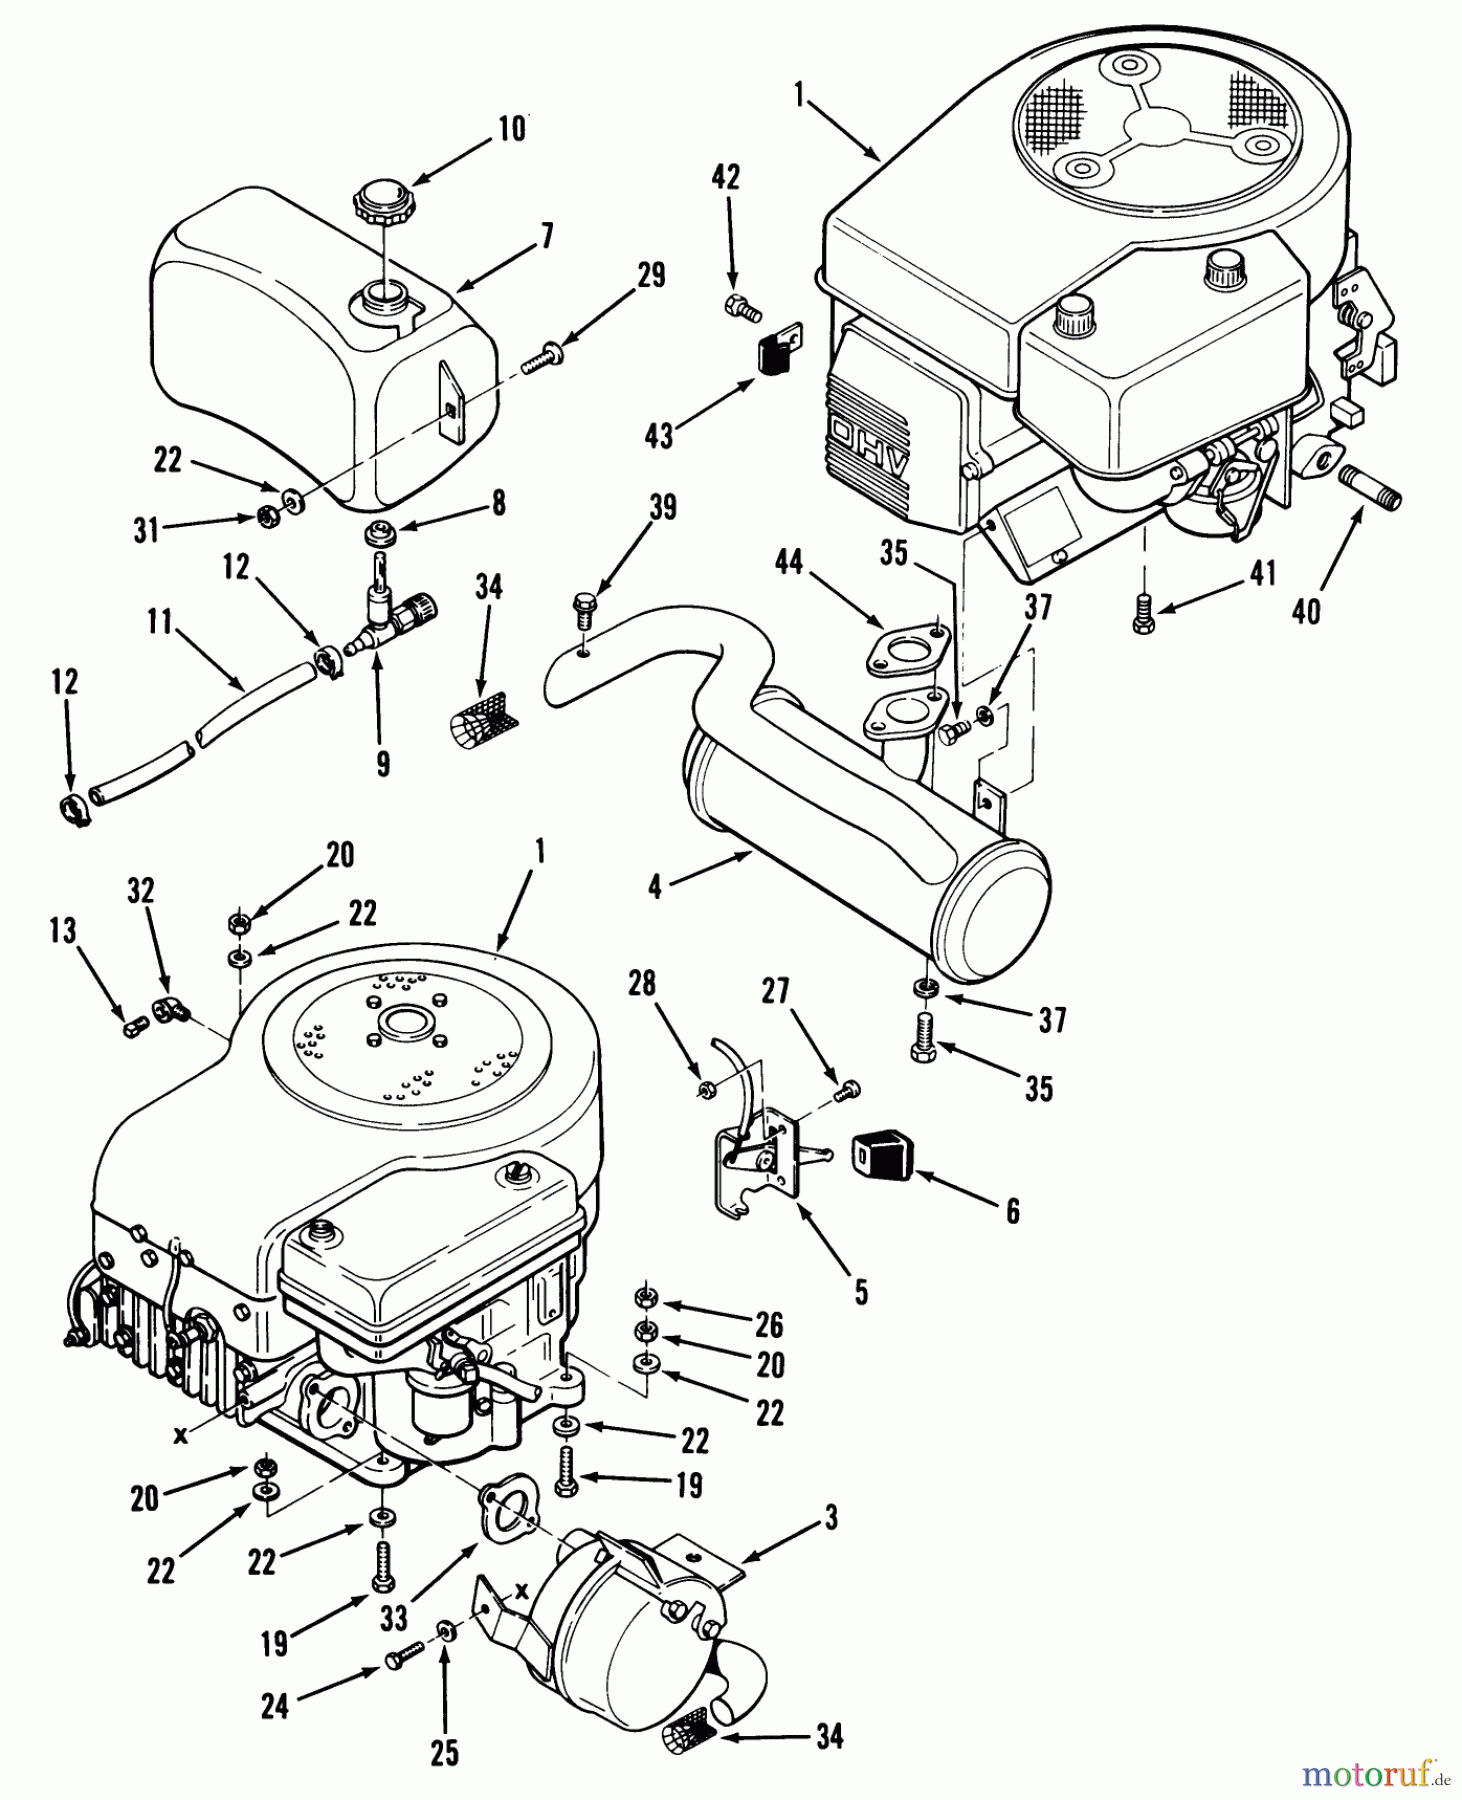  Toro Neu Mowers, Lawn & Garden Tractor Seite 1 32-10BE01 (210-H) - Toro 210-H Tractor, 1990 ENGINE, FUEL & EXHAUST SYSTEMS